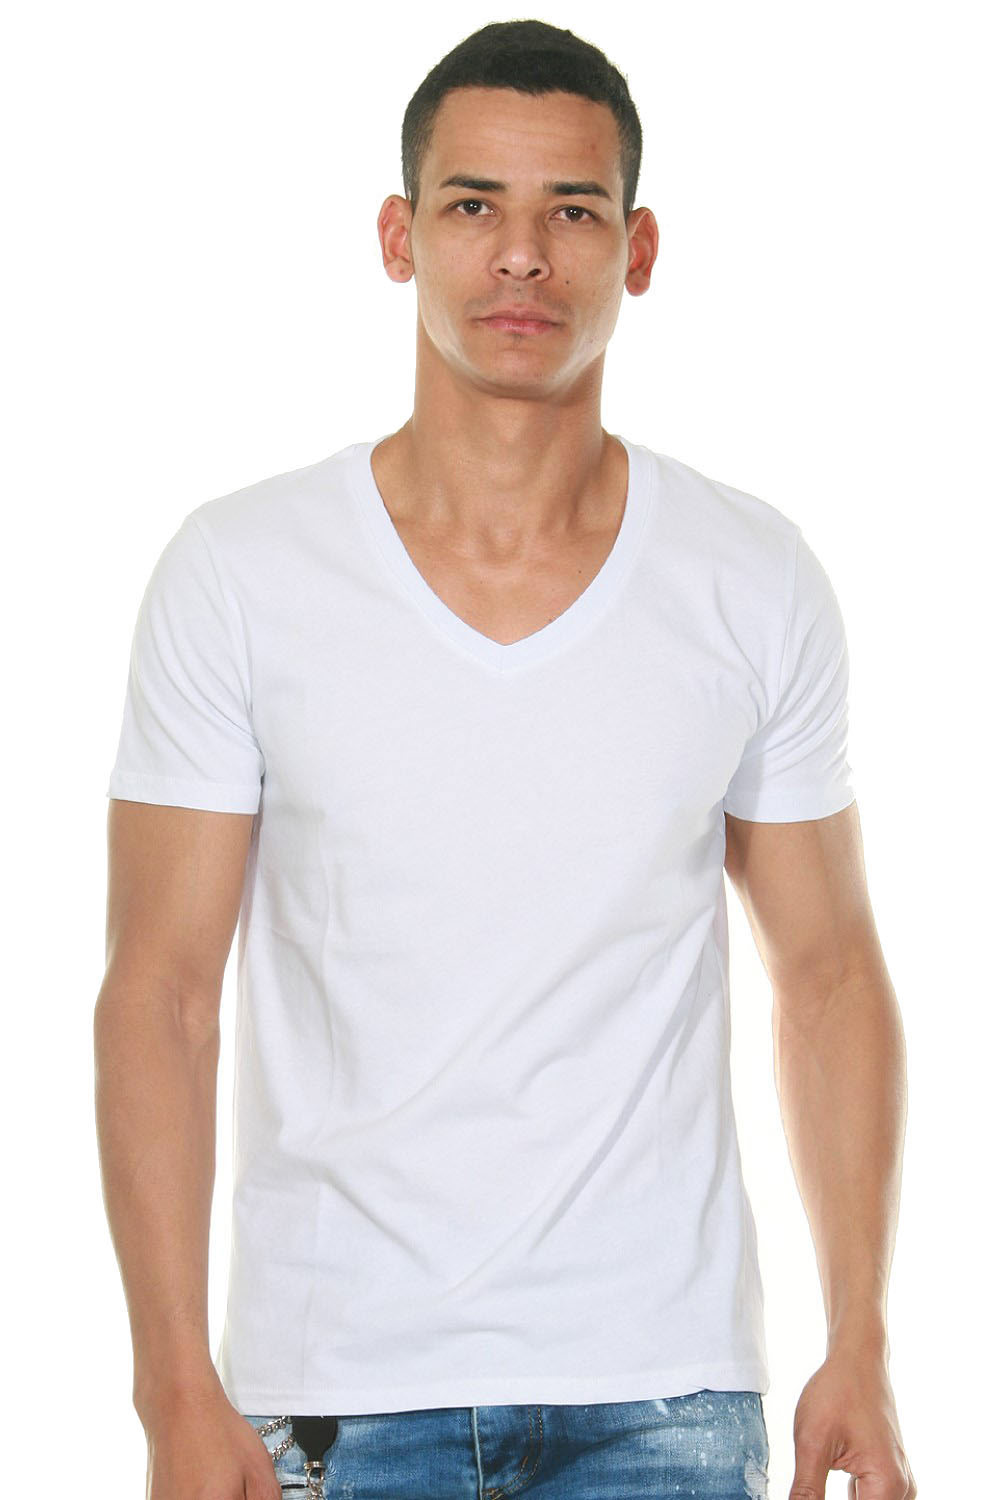 CATCH T-shirt at oboy.com